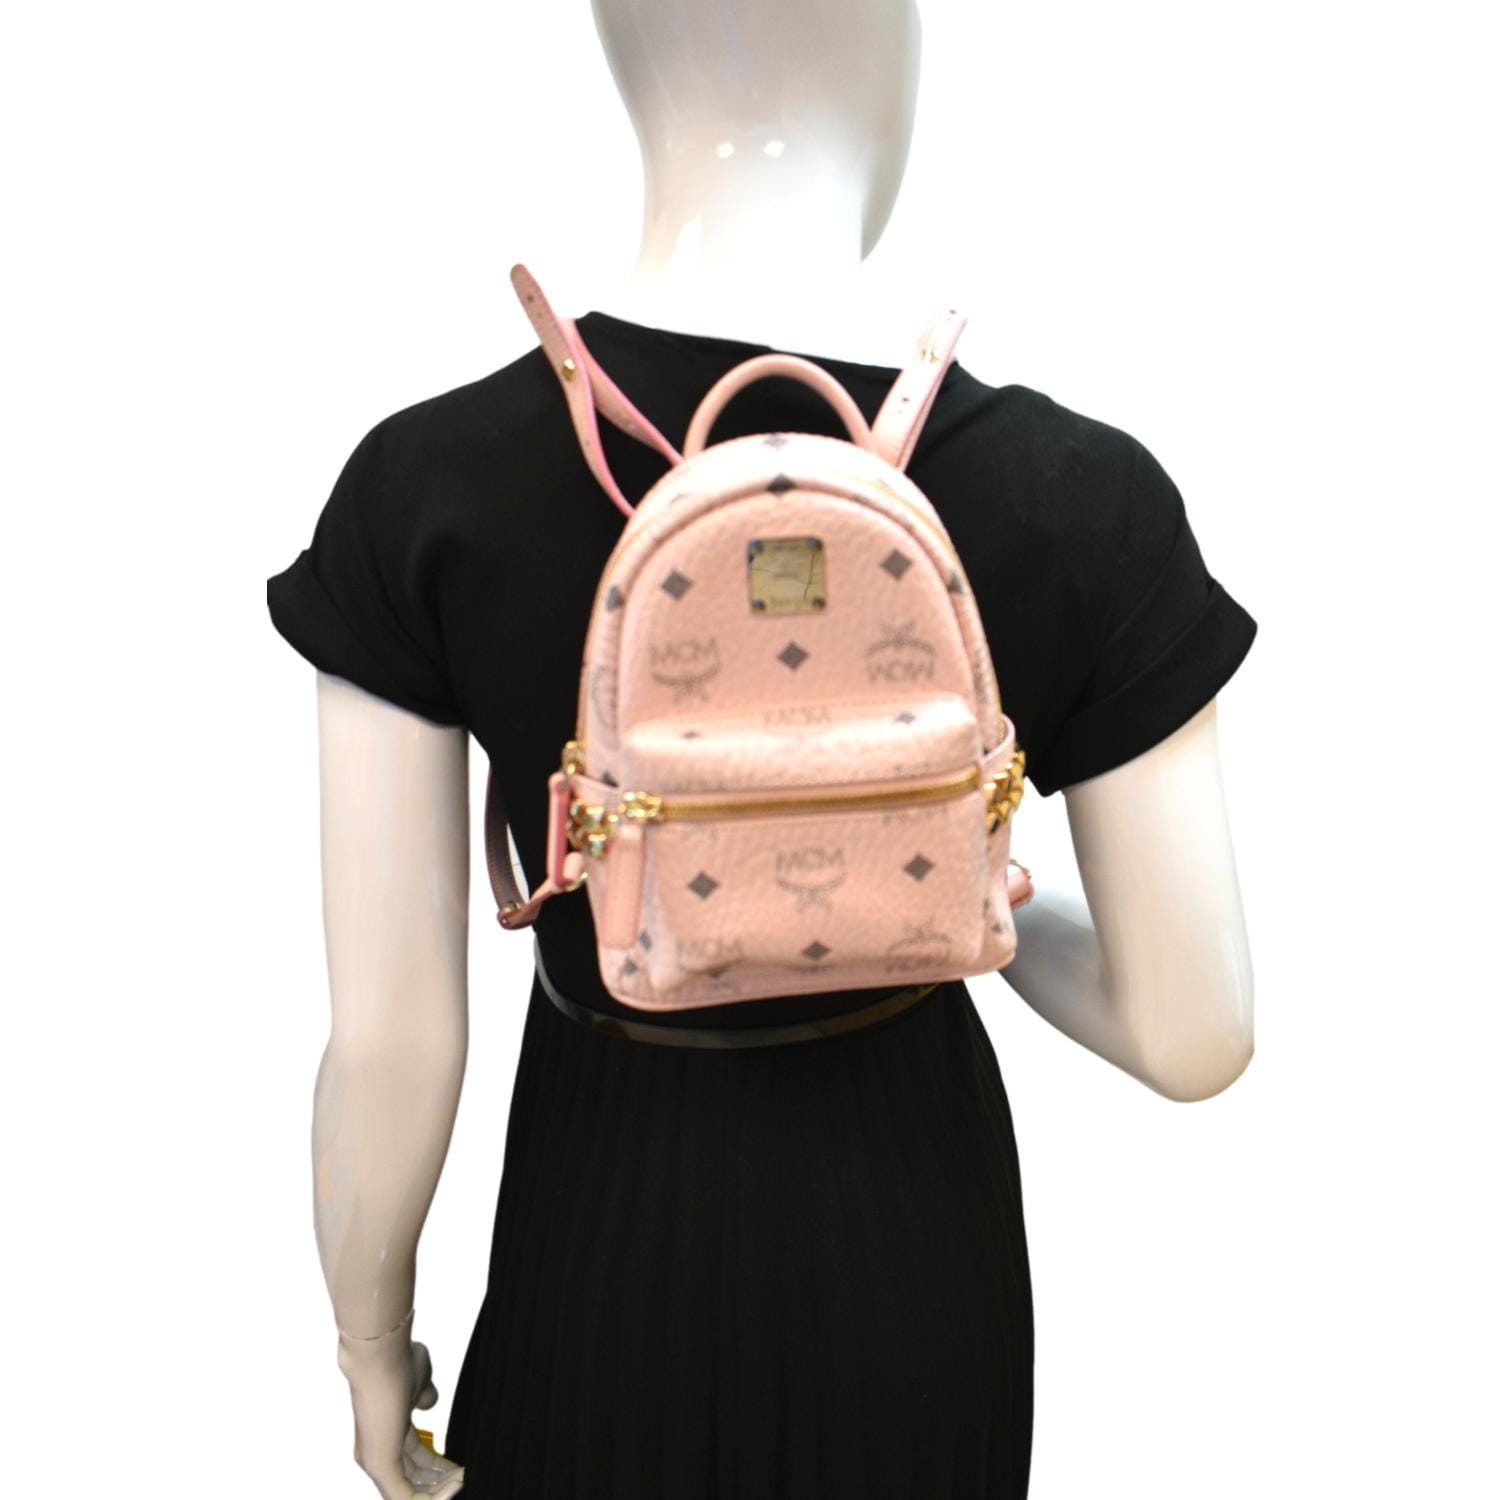 MCM Stark Visetos Small Side-Stud Backpack, Pink